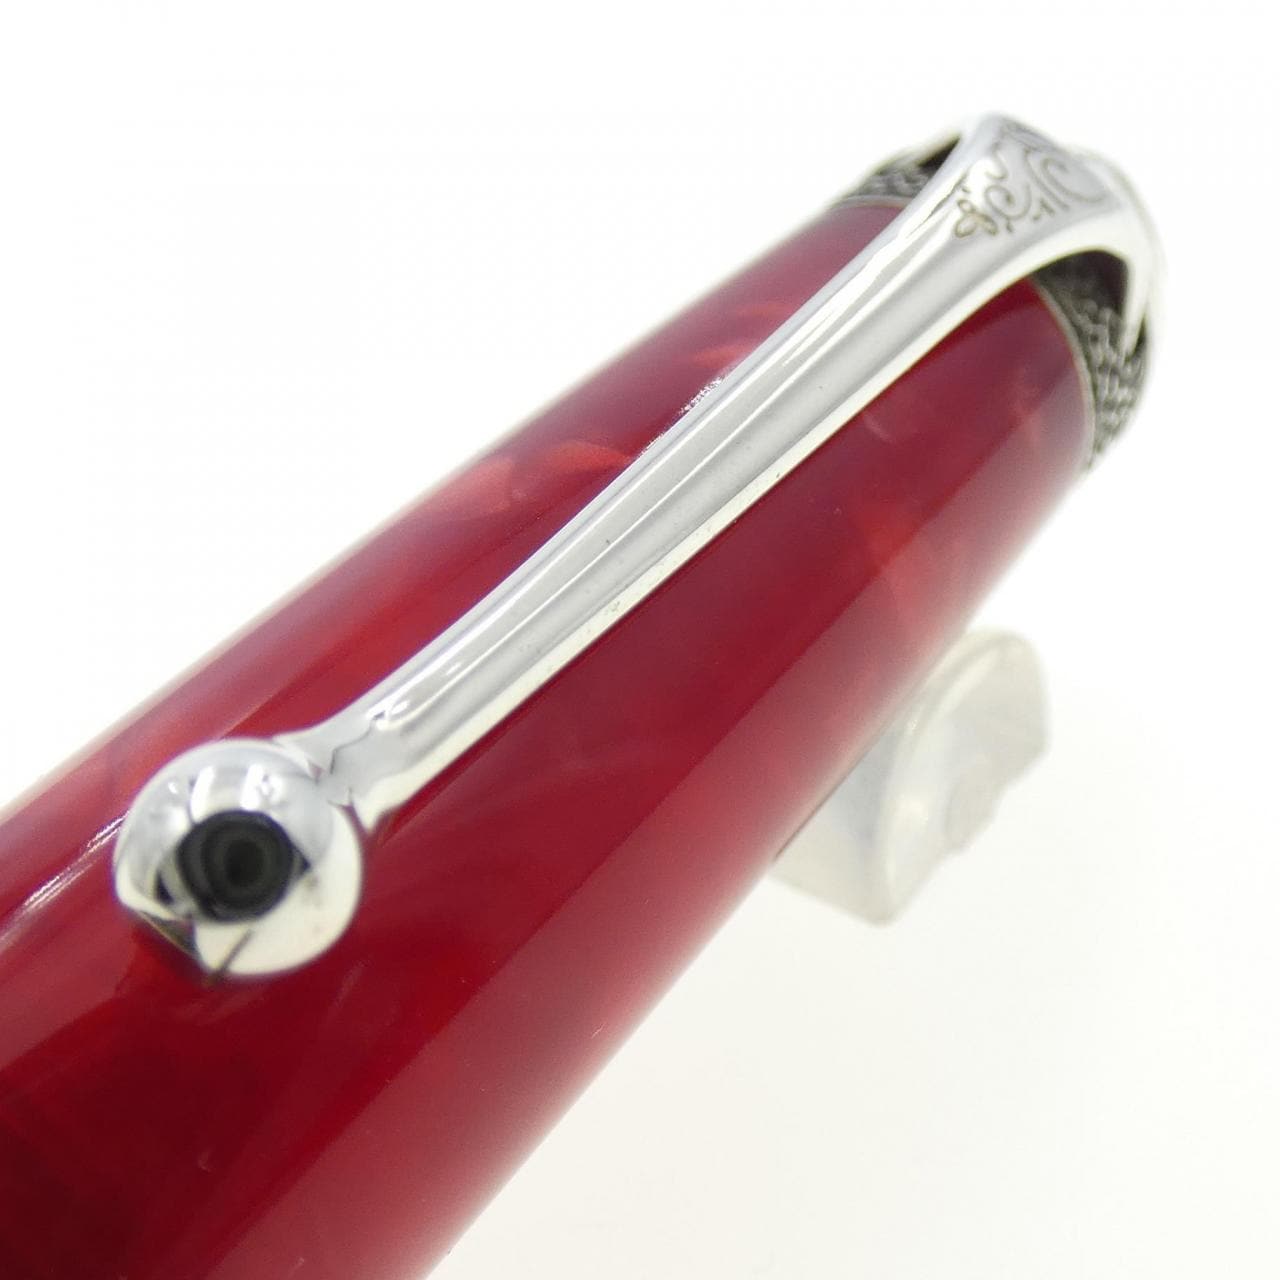 AURORA 85th Anniversary Red Fountain Pen